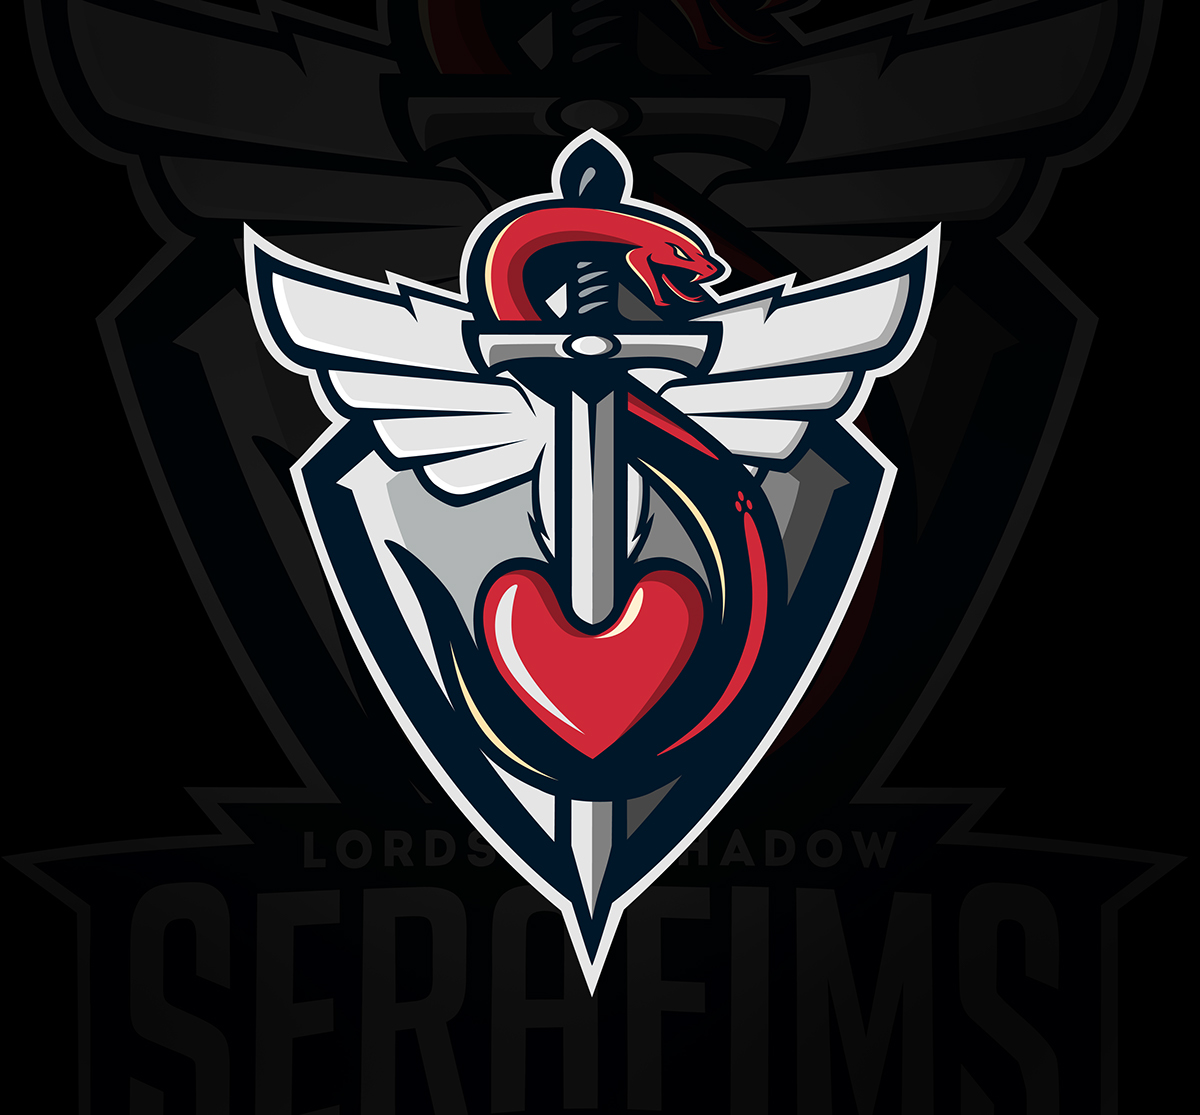 DOTA snake shield heart krino sport logo sport esport cybersport esports